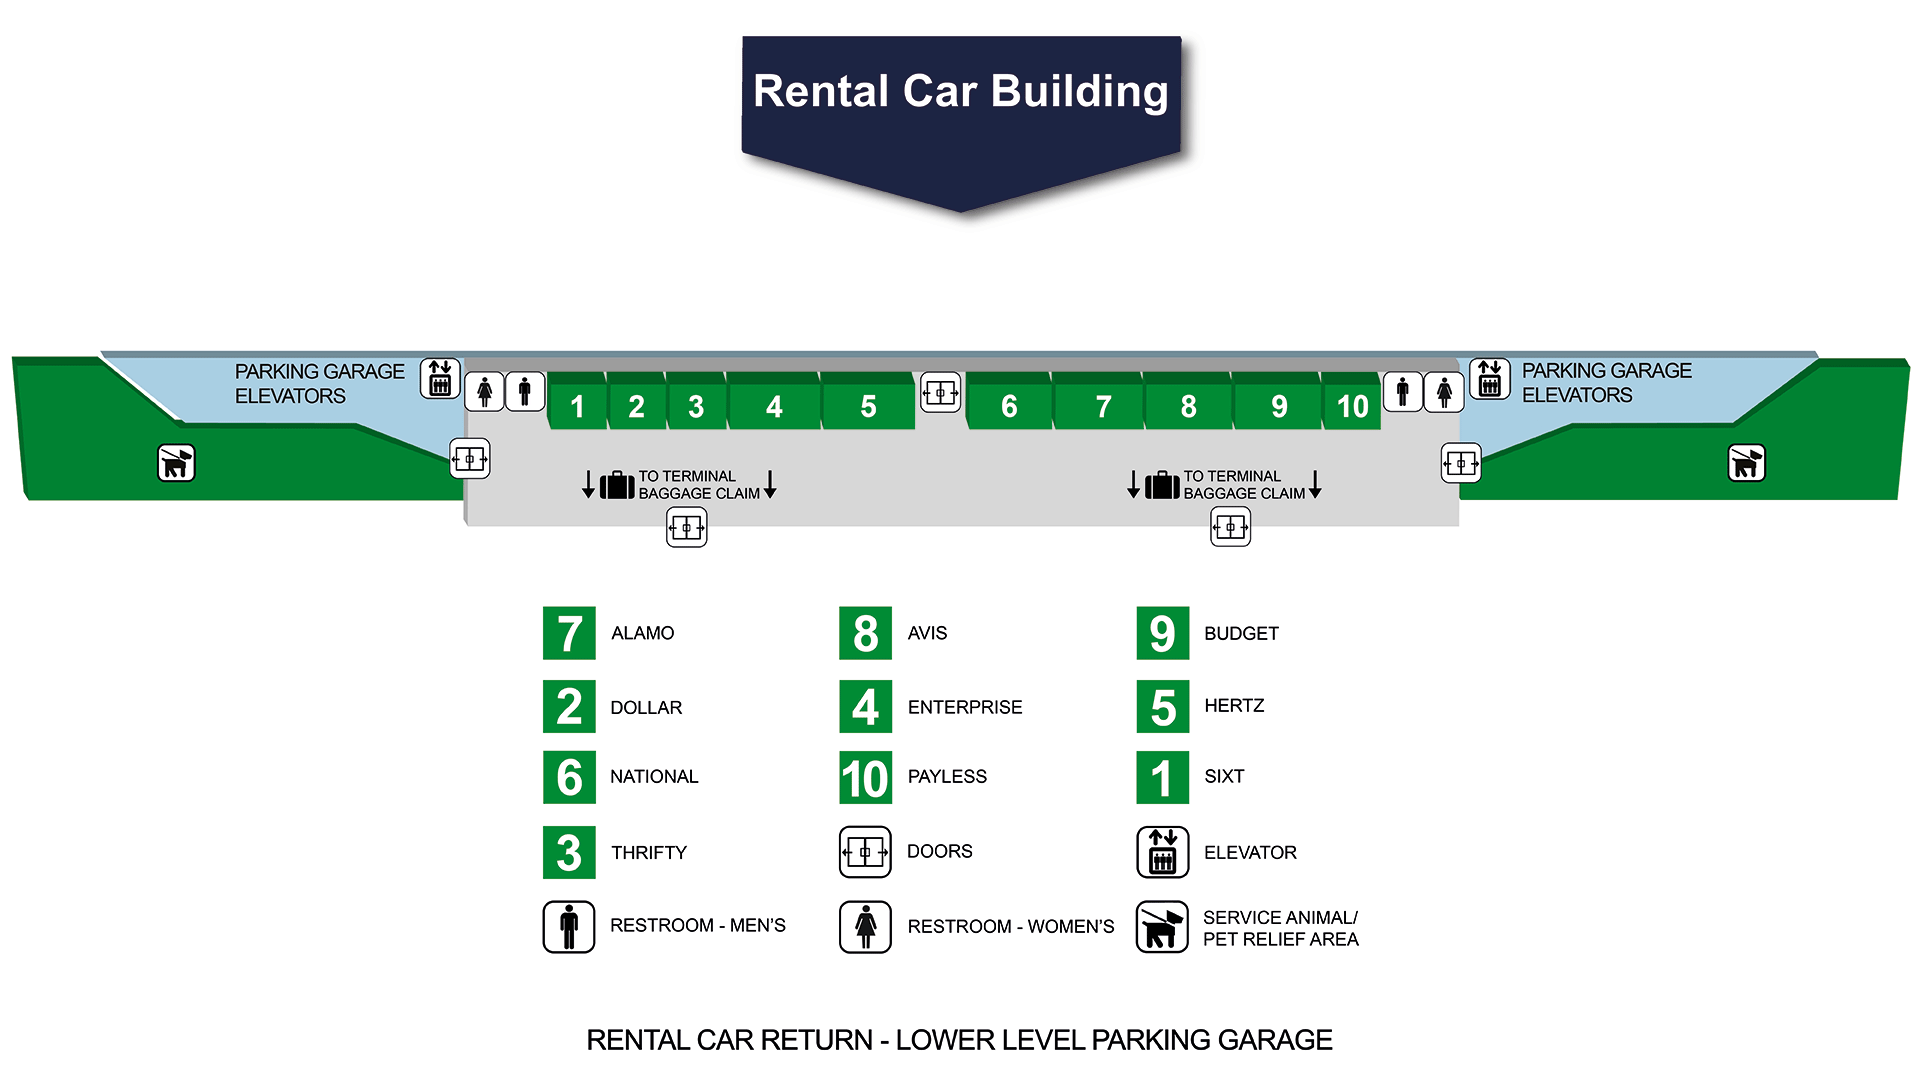 Southwest Florida International Airport Rental Car Building Map and Index